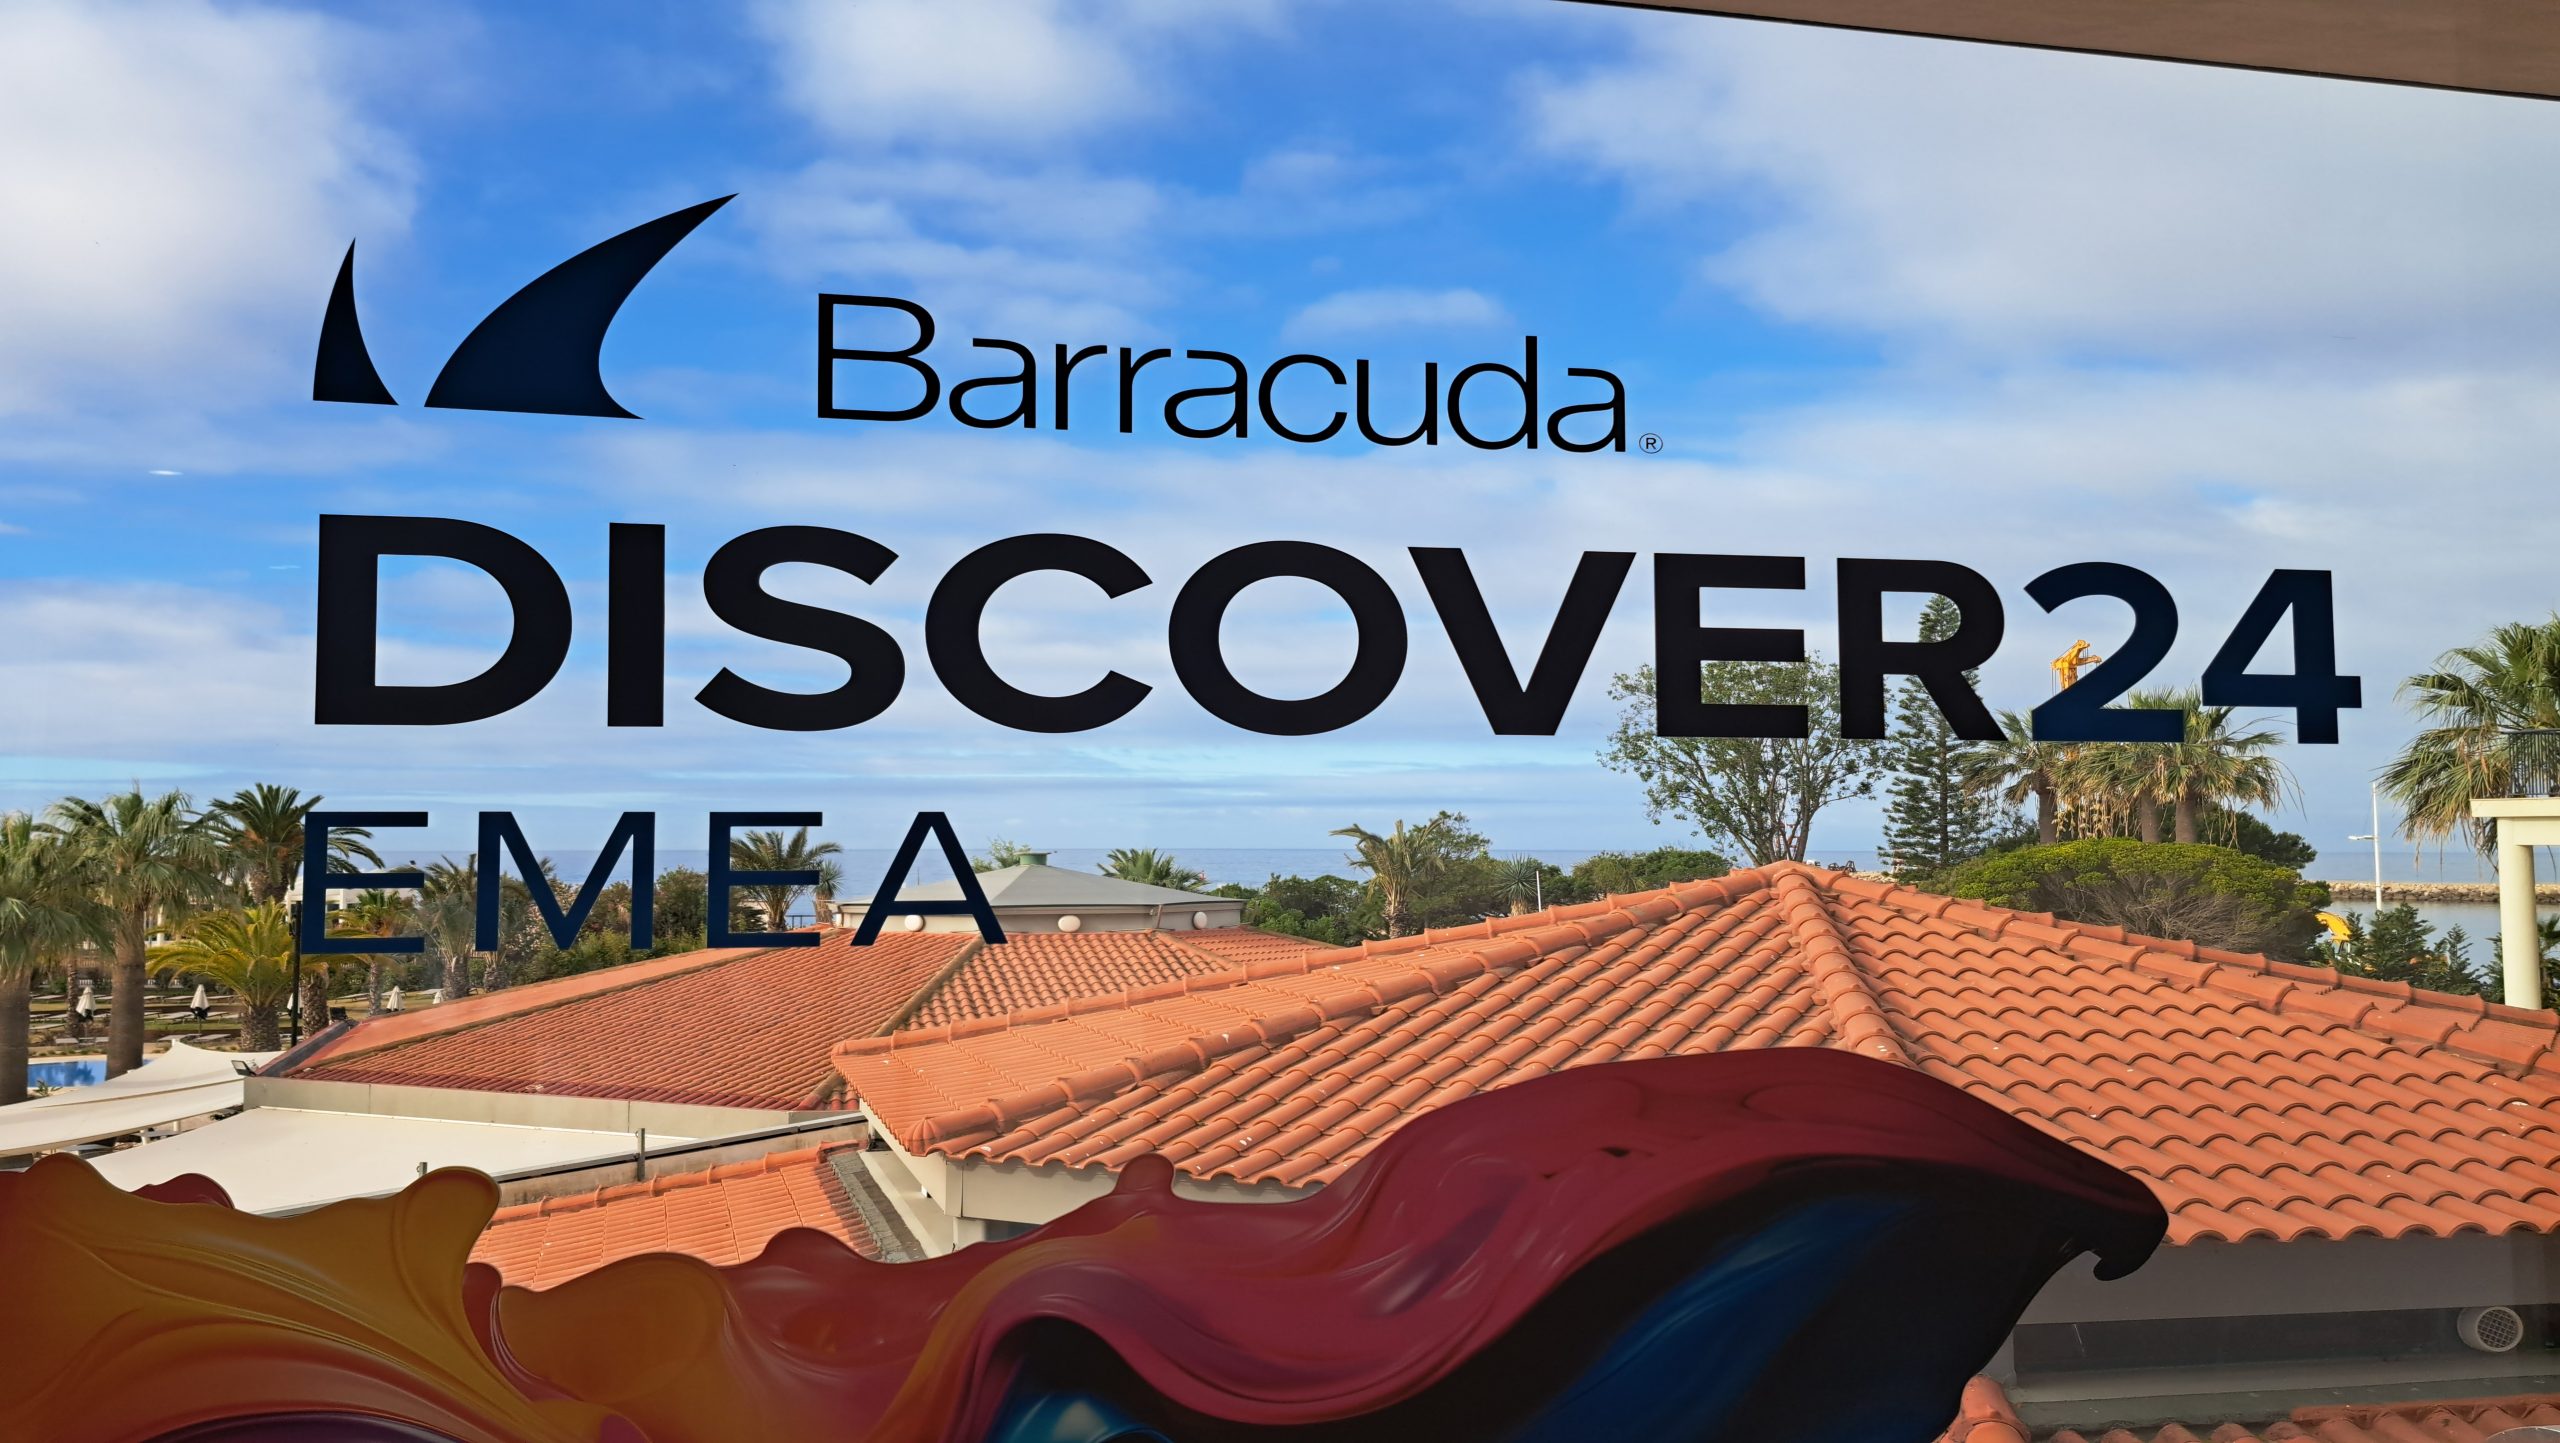 Barracuda Discover24